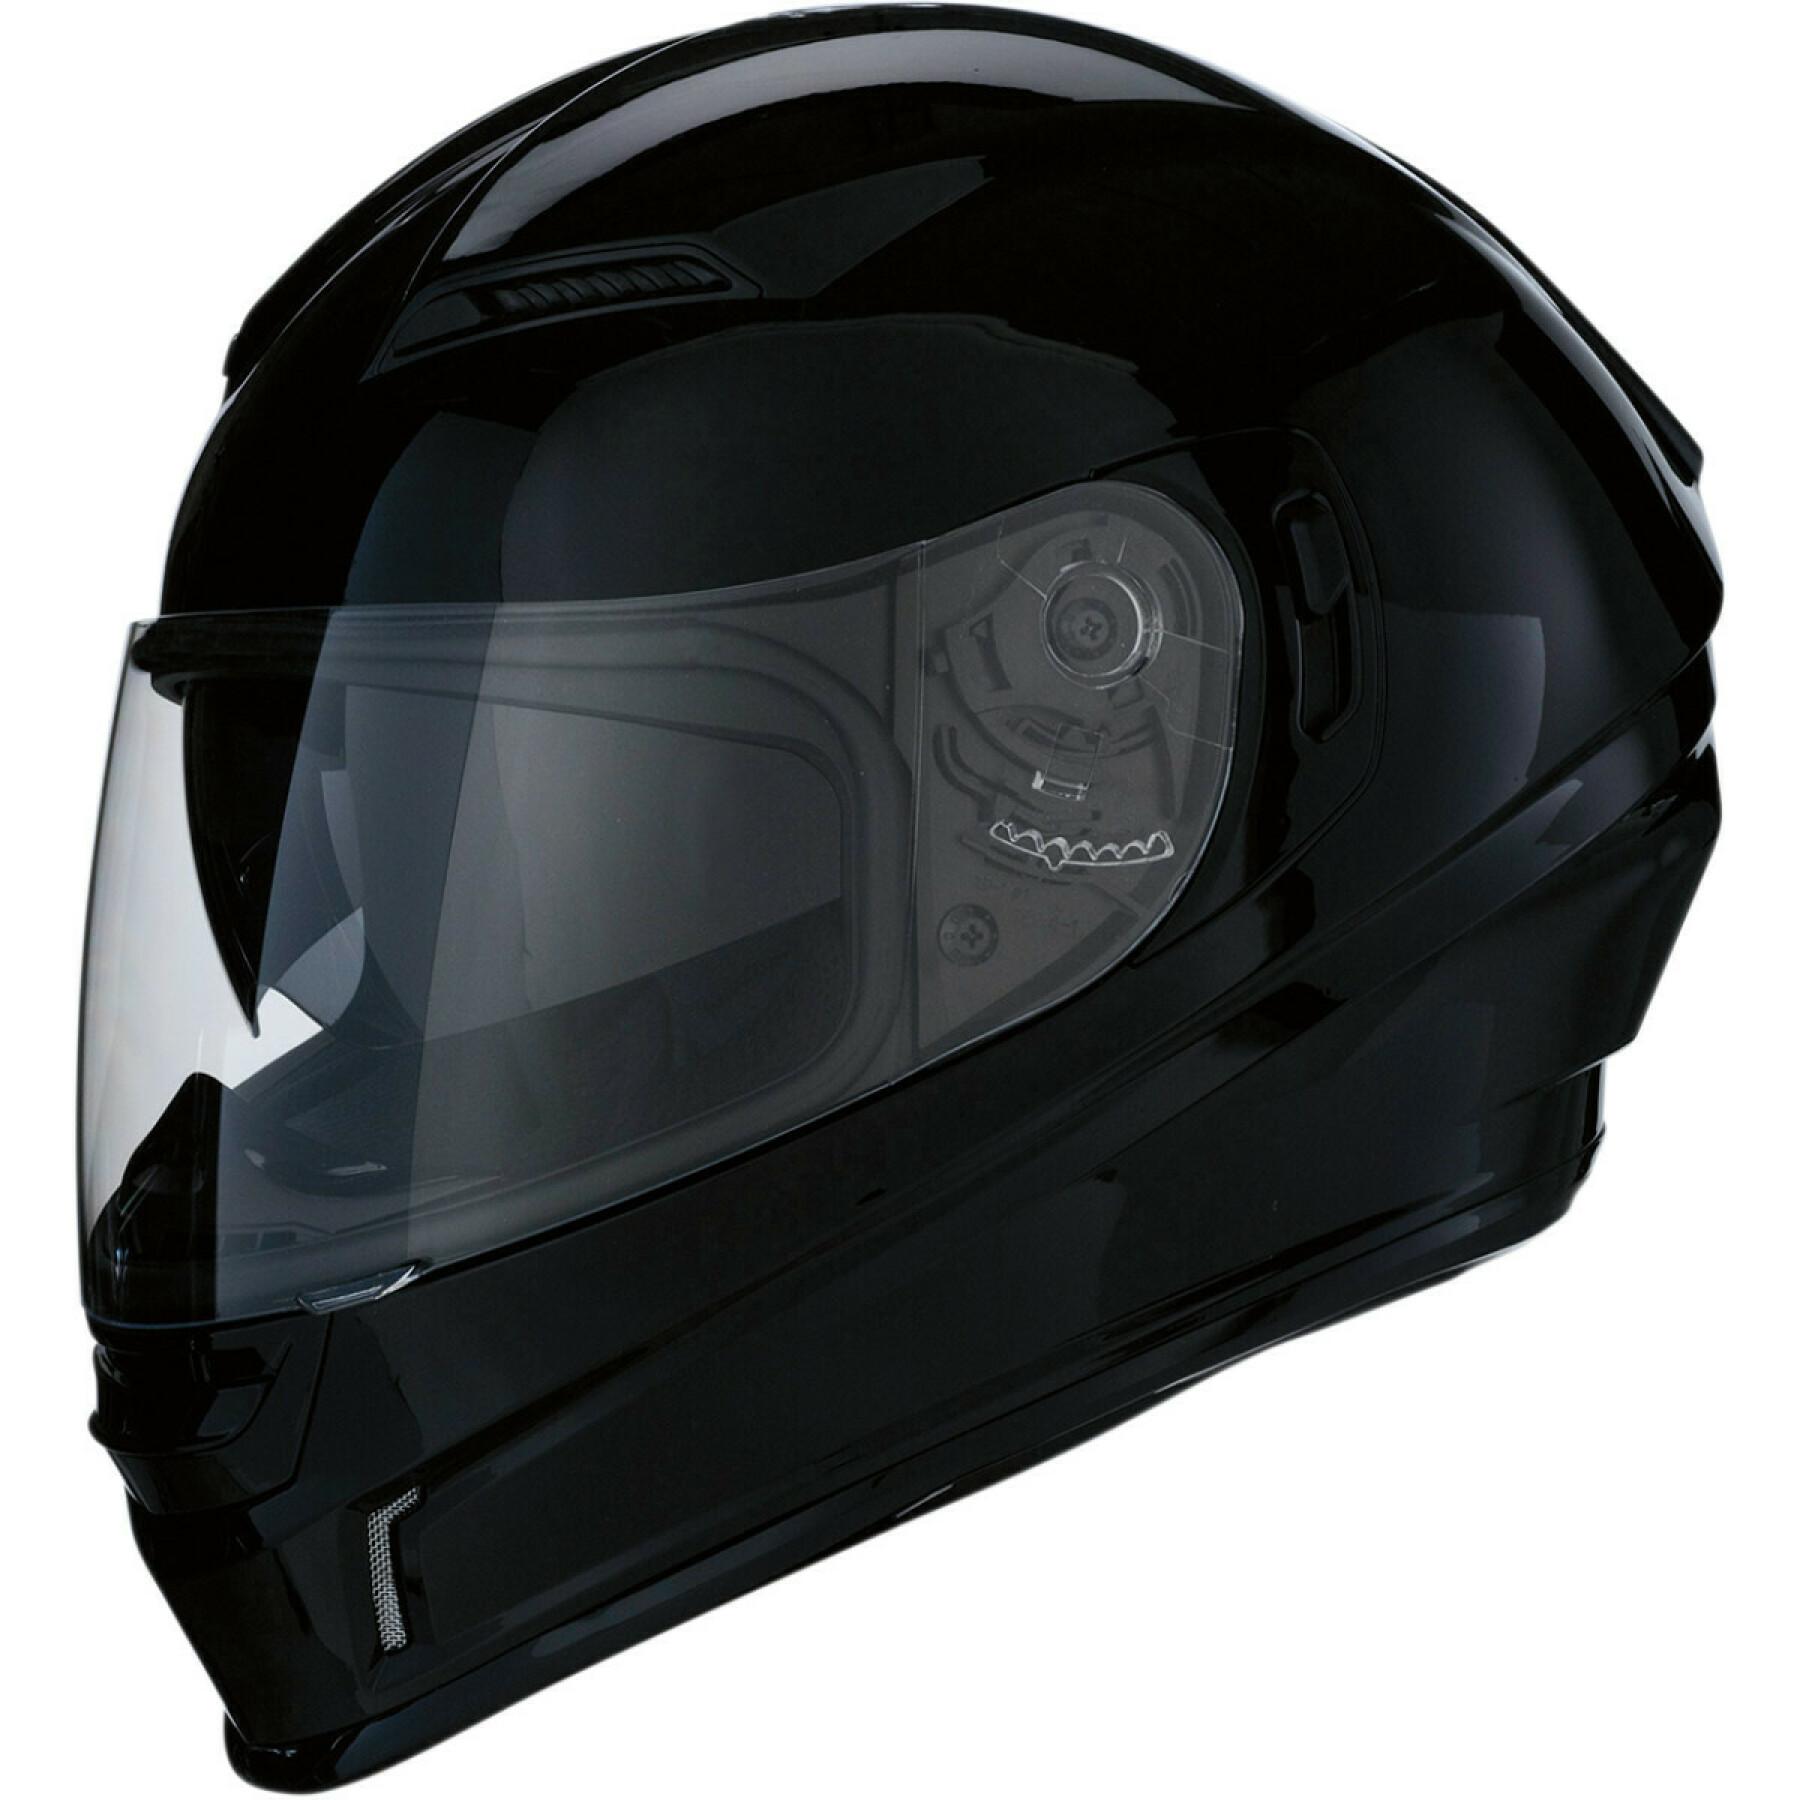 Full face motorcycle helmet Z1R jackal black